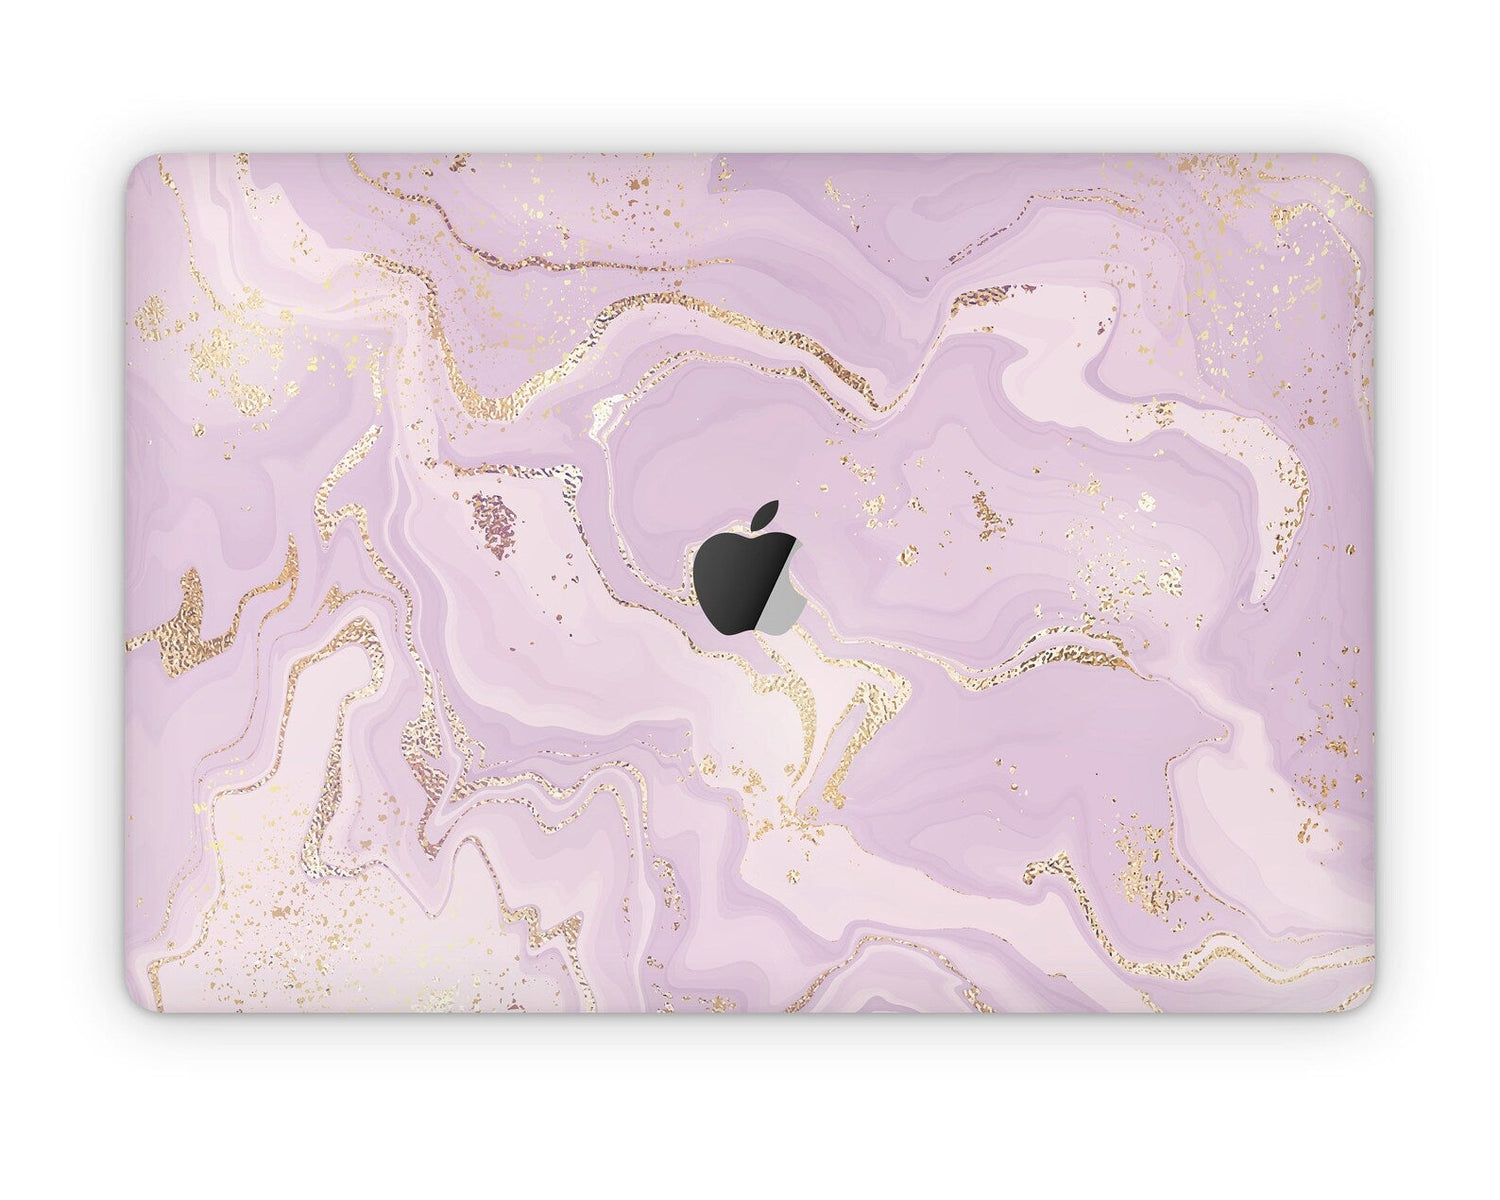 Lux Skins MacBook Ethereal Lavender Marble Pro 15" (A1707/1990) Skins - Pattern Marble Skin